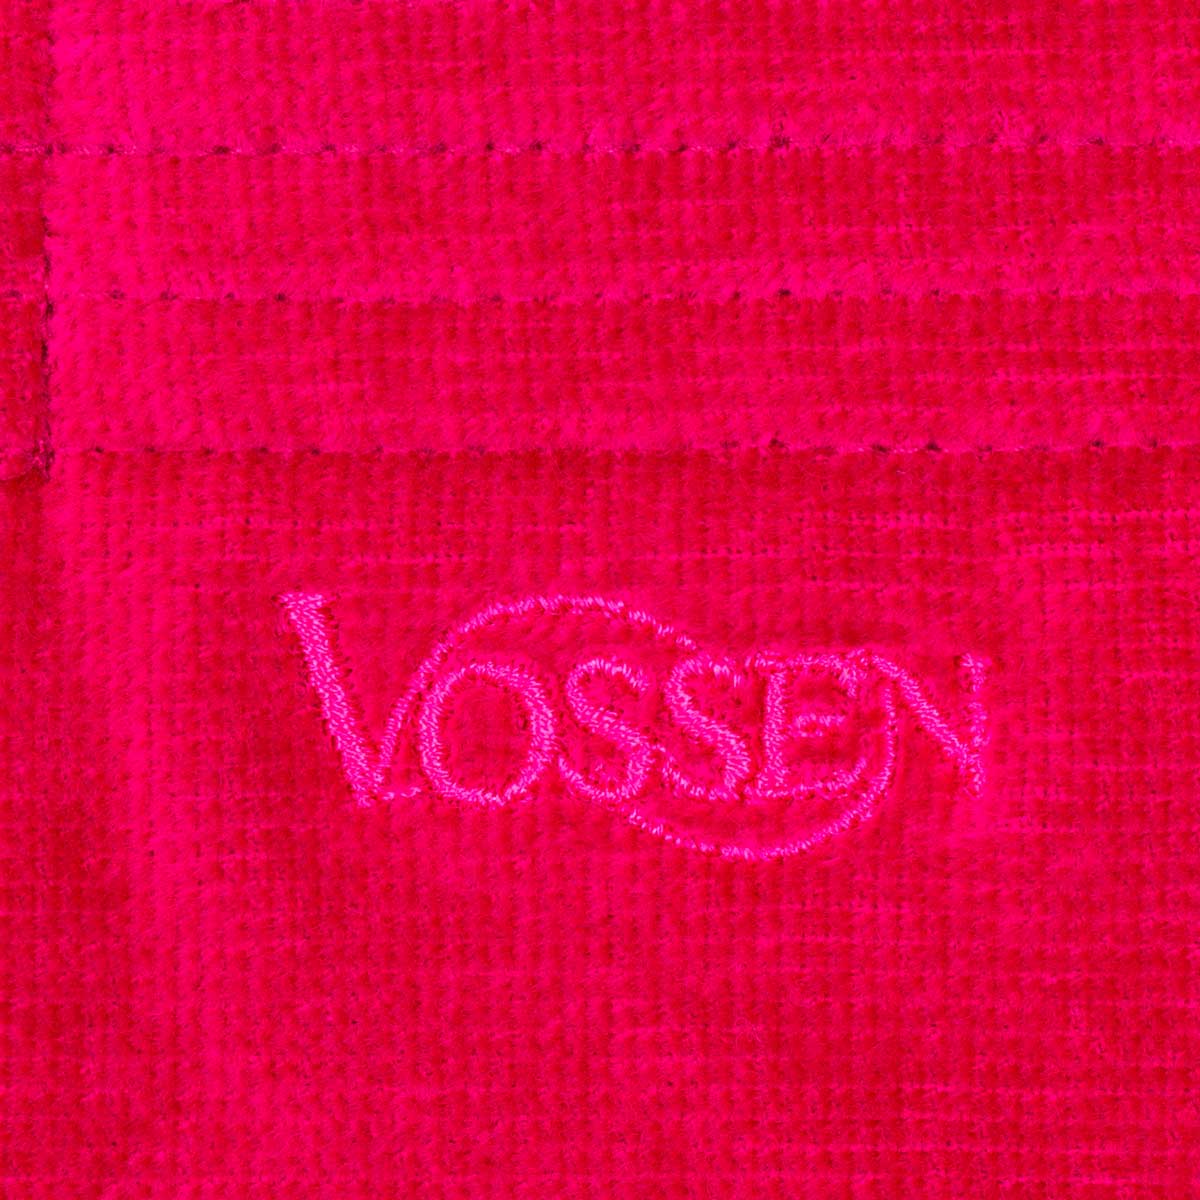 Халат велюровый с капюшоном Vossen Texas размер S, фуксия Vossen 7990 05112 3770 3844 S - фото 4